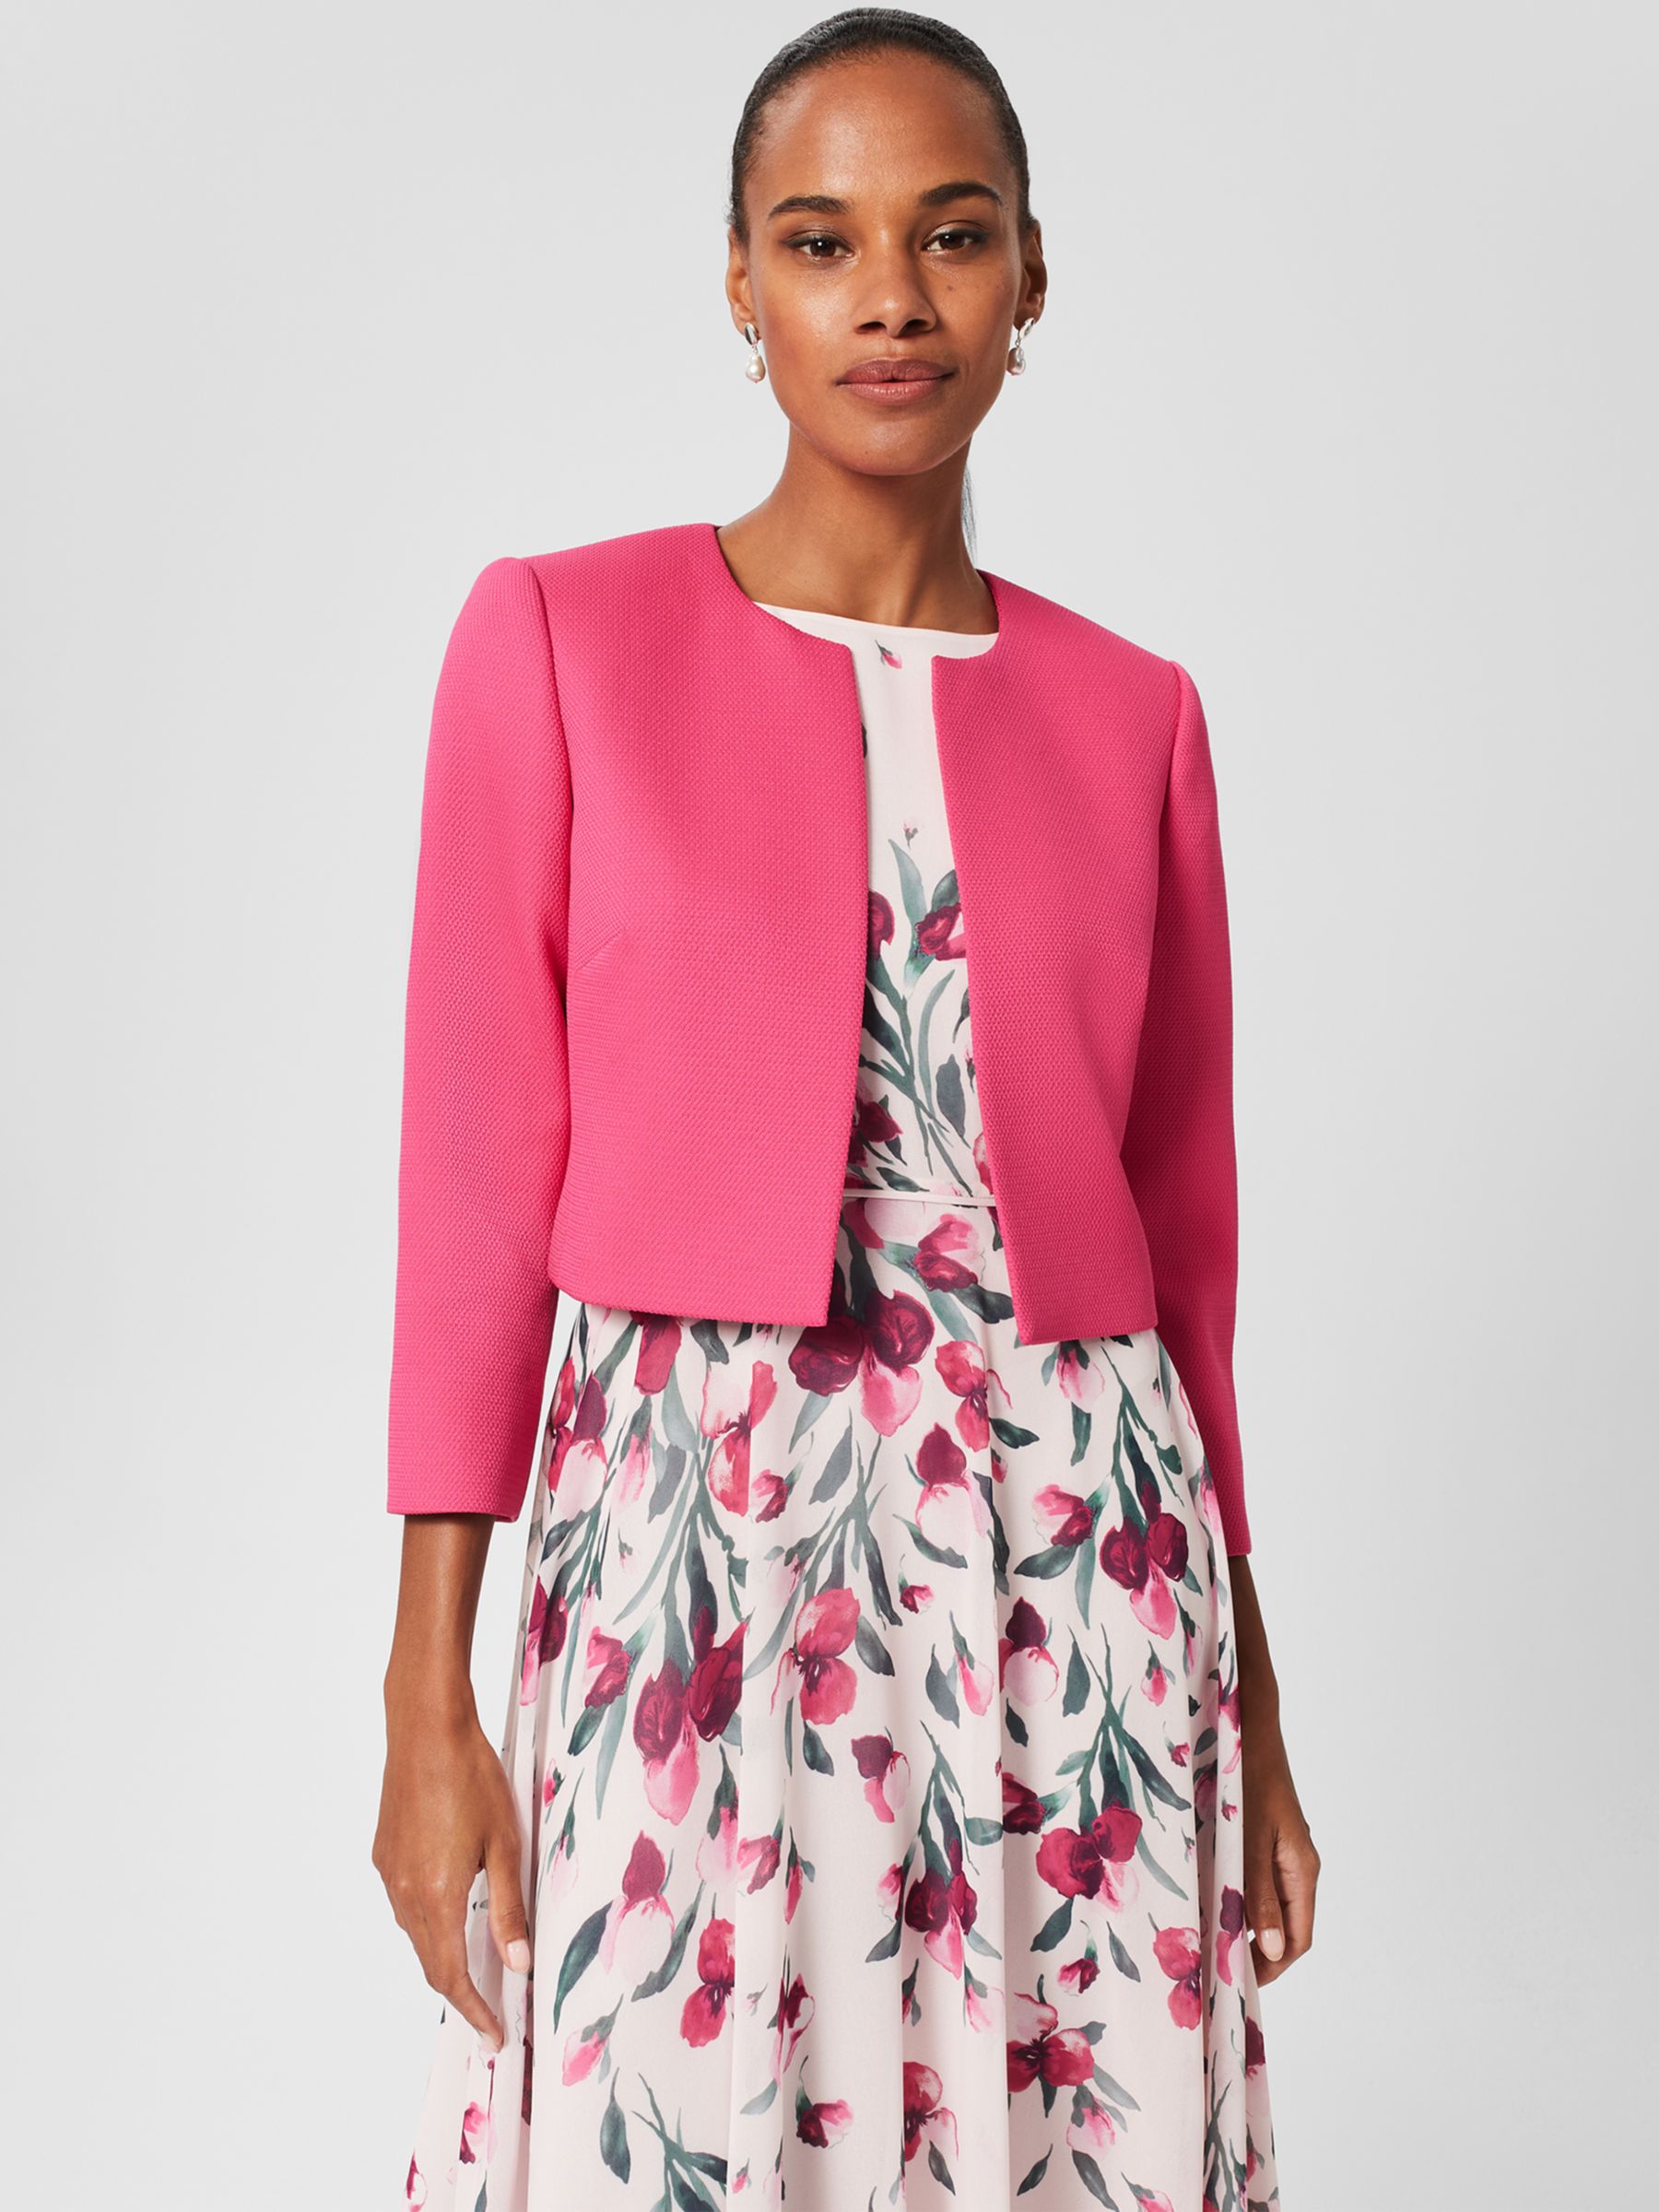 Hobbs Elize Tailored Jacket, Bright Pink at John Lewis & Partners